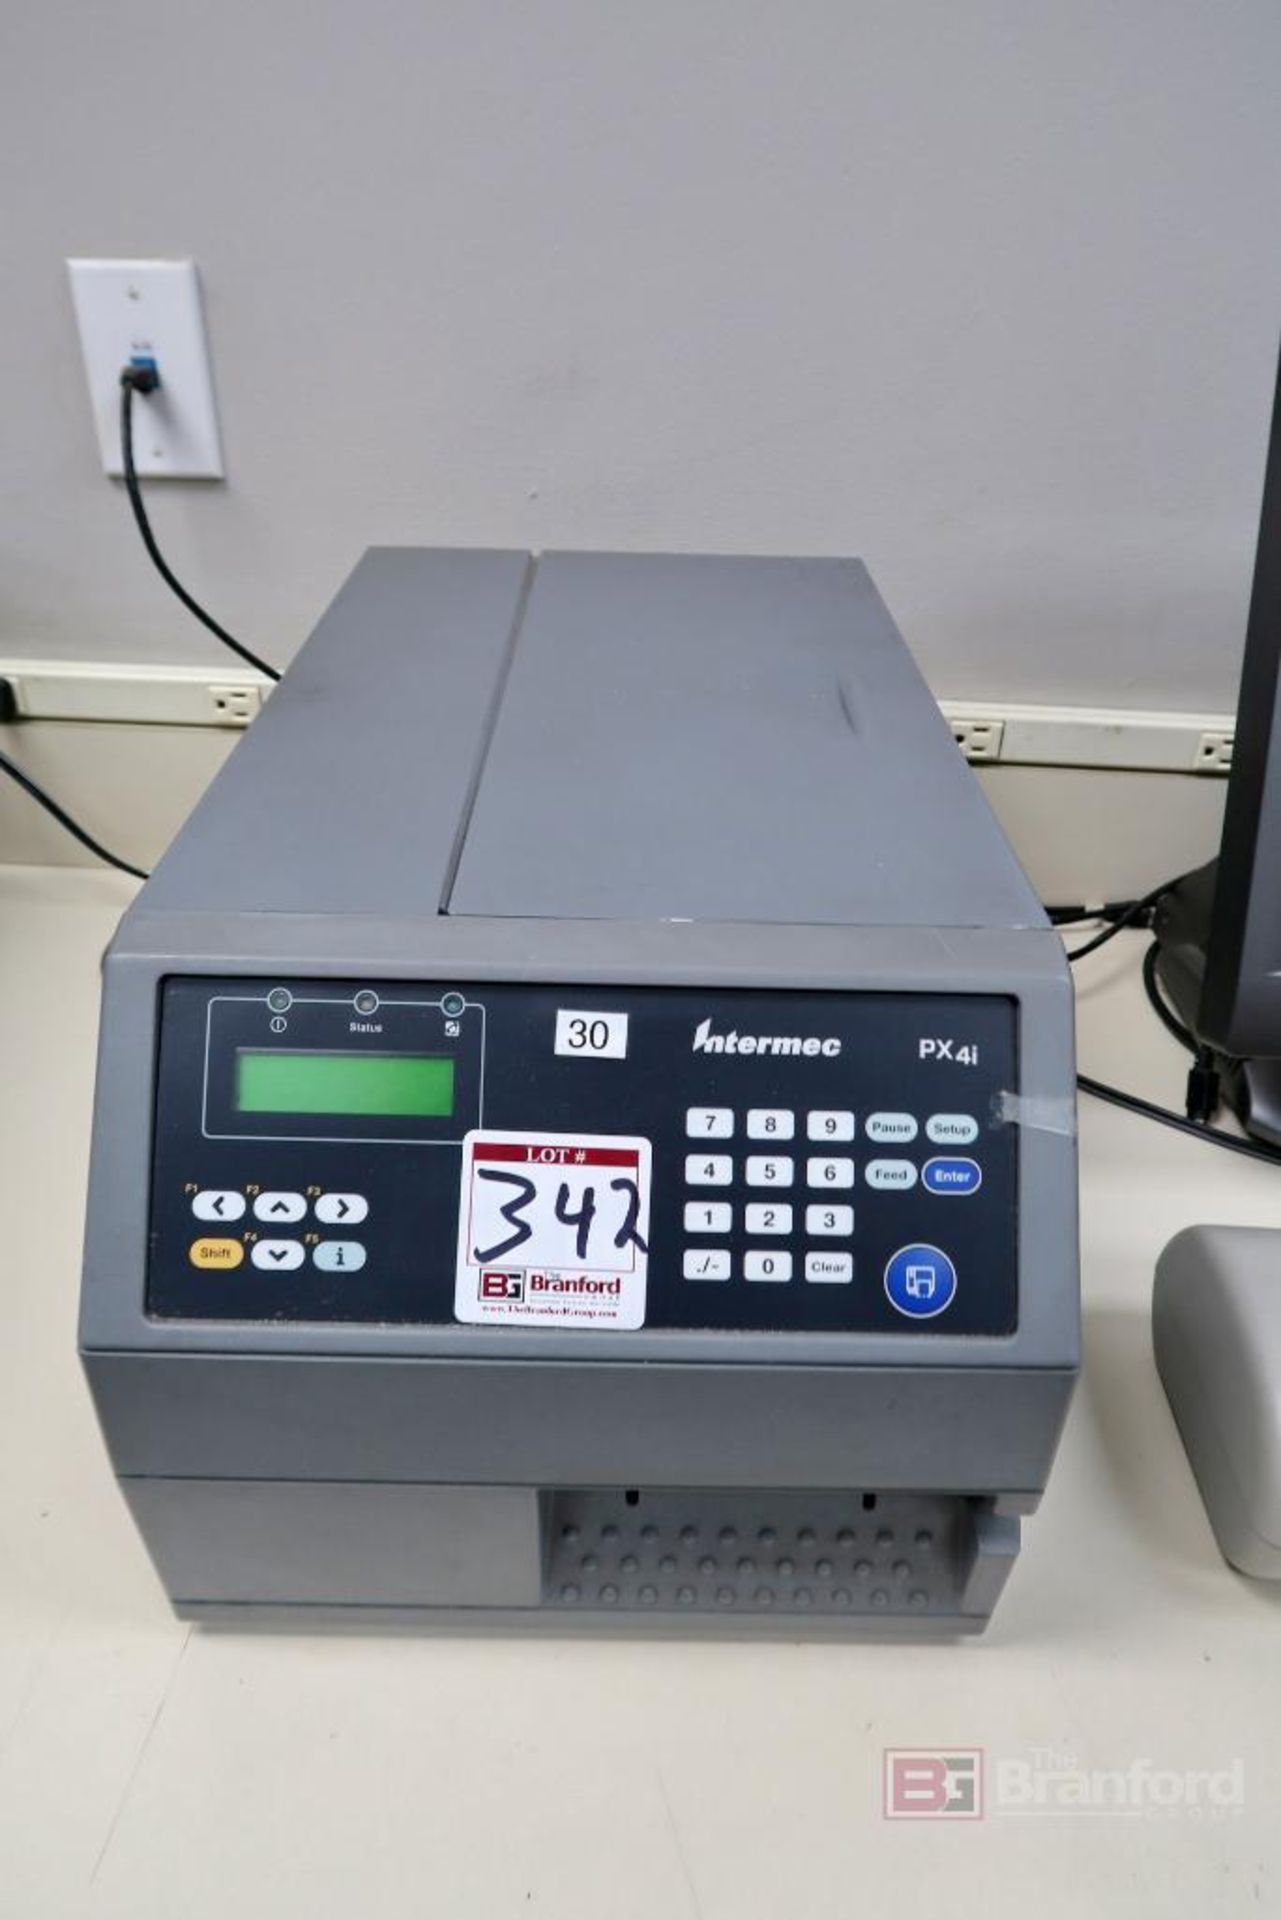 Intermec Label Printer Model PX4i